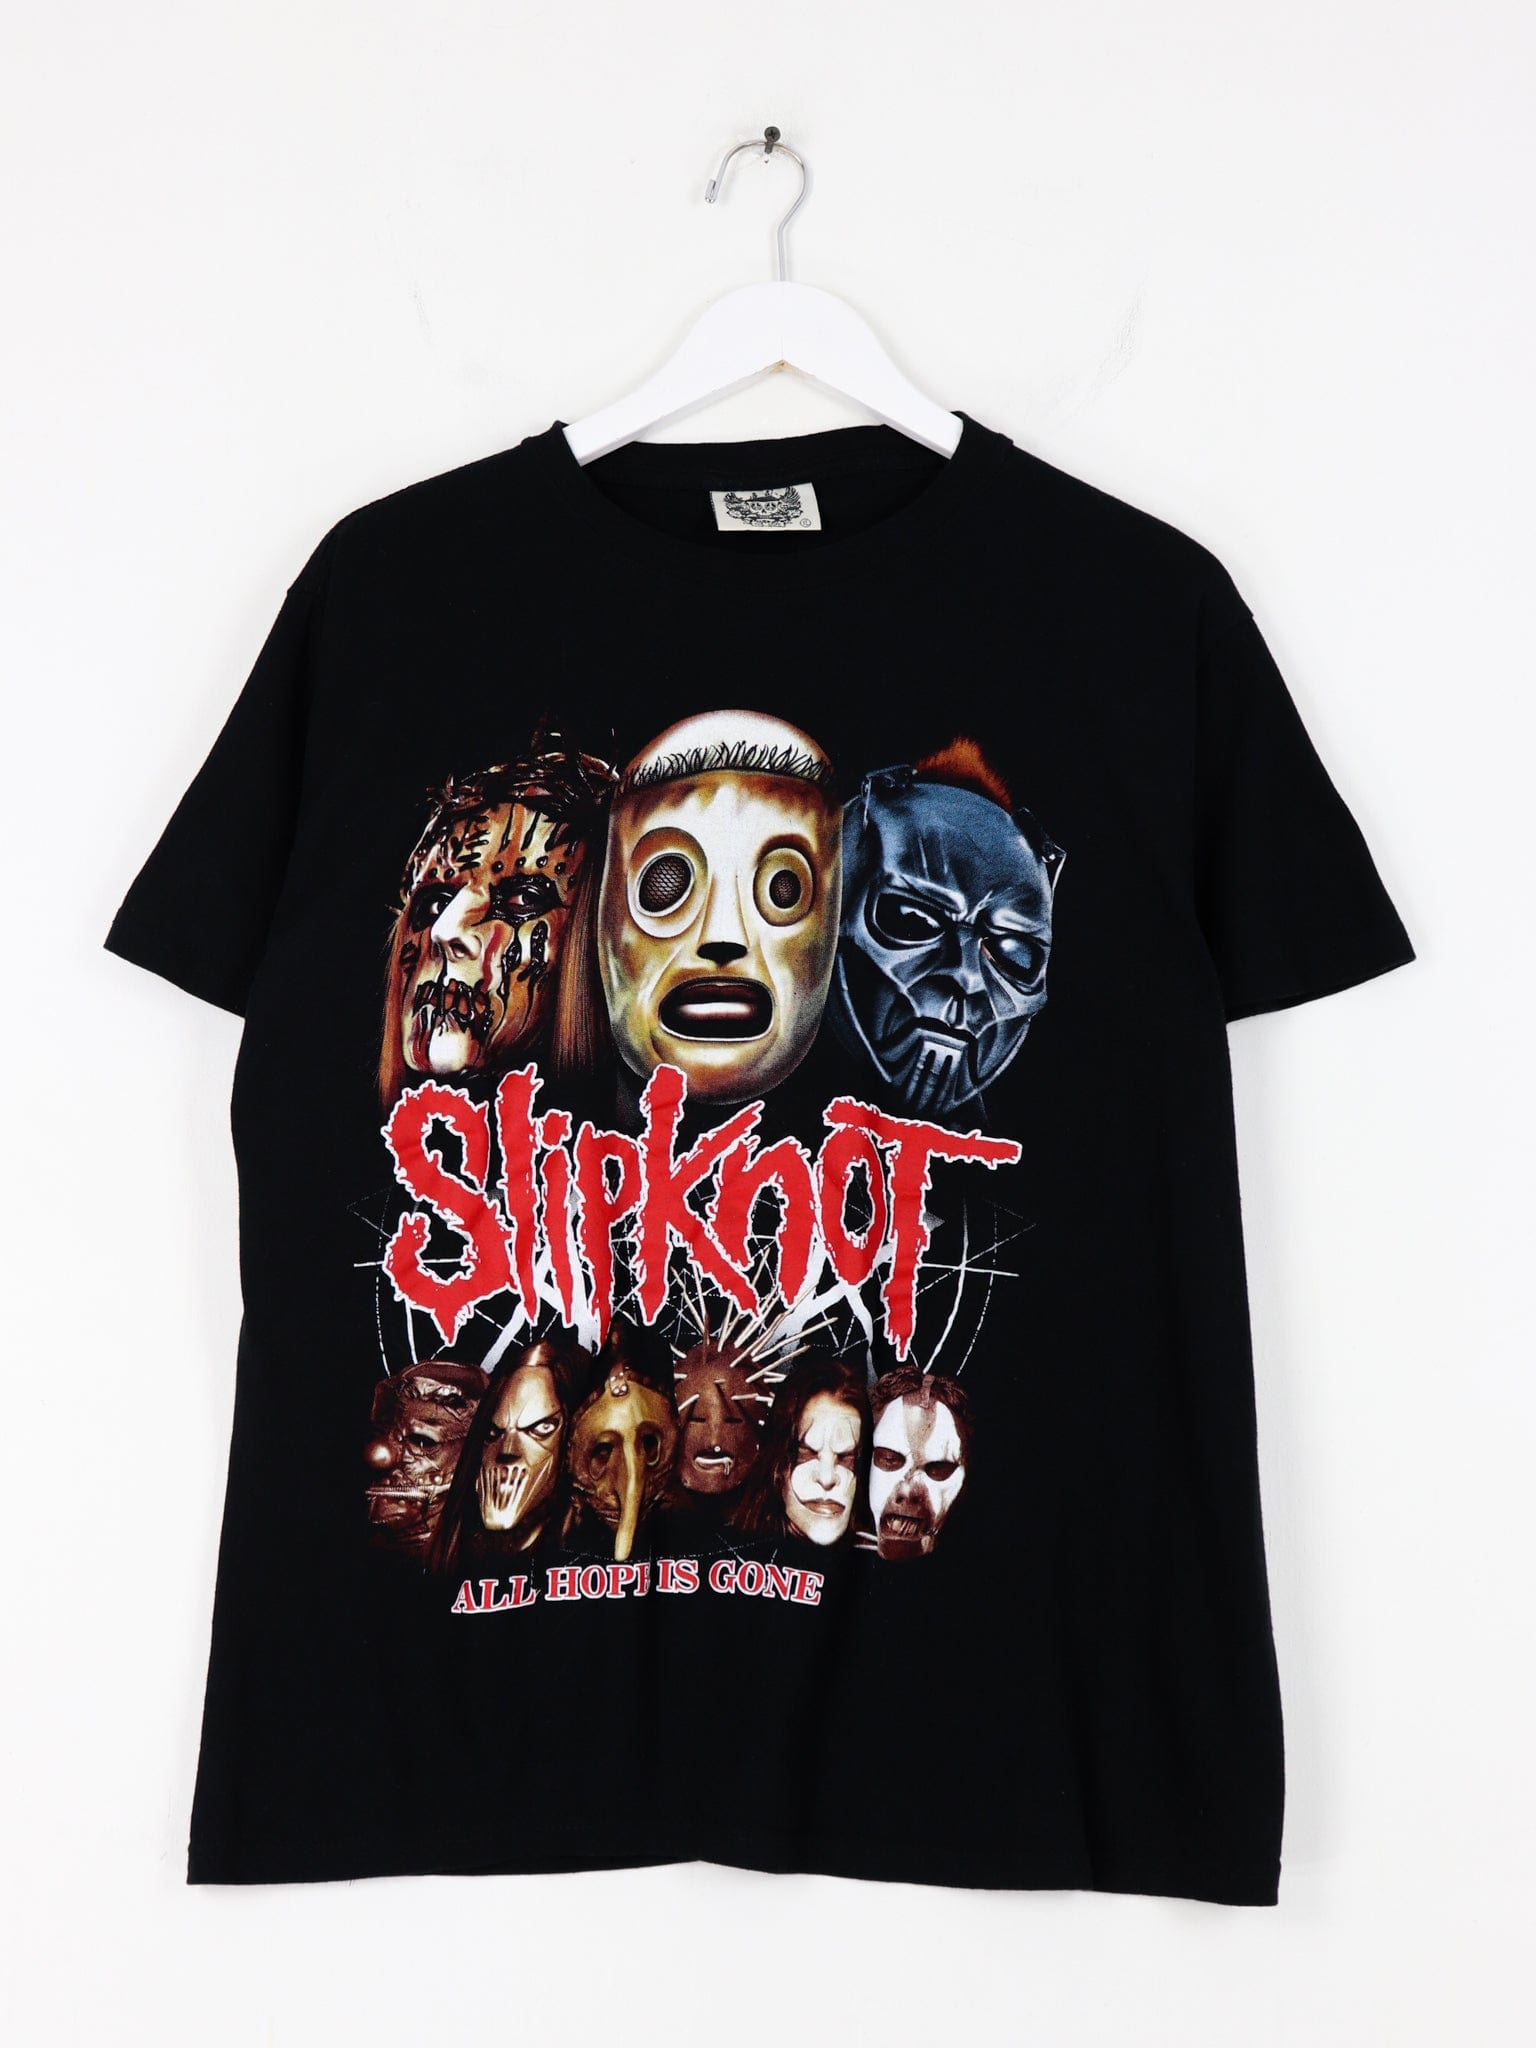 Slipknot All Hope Is Gone T Shirt Size XL Fits Medium